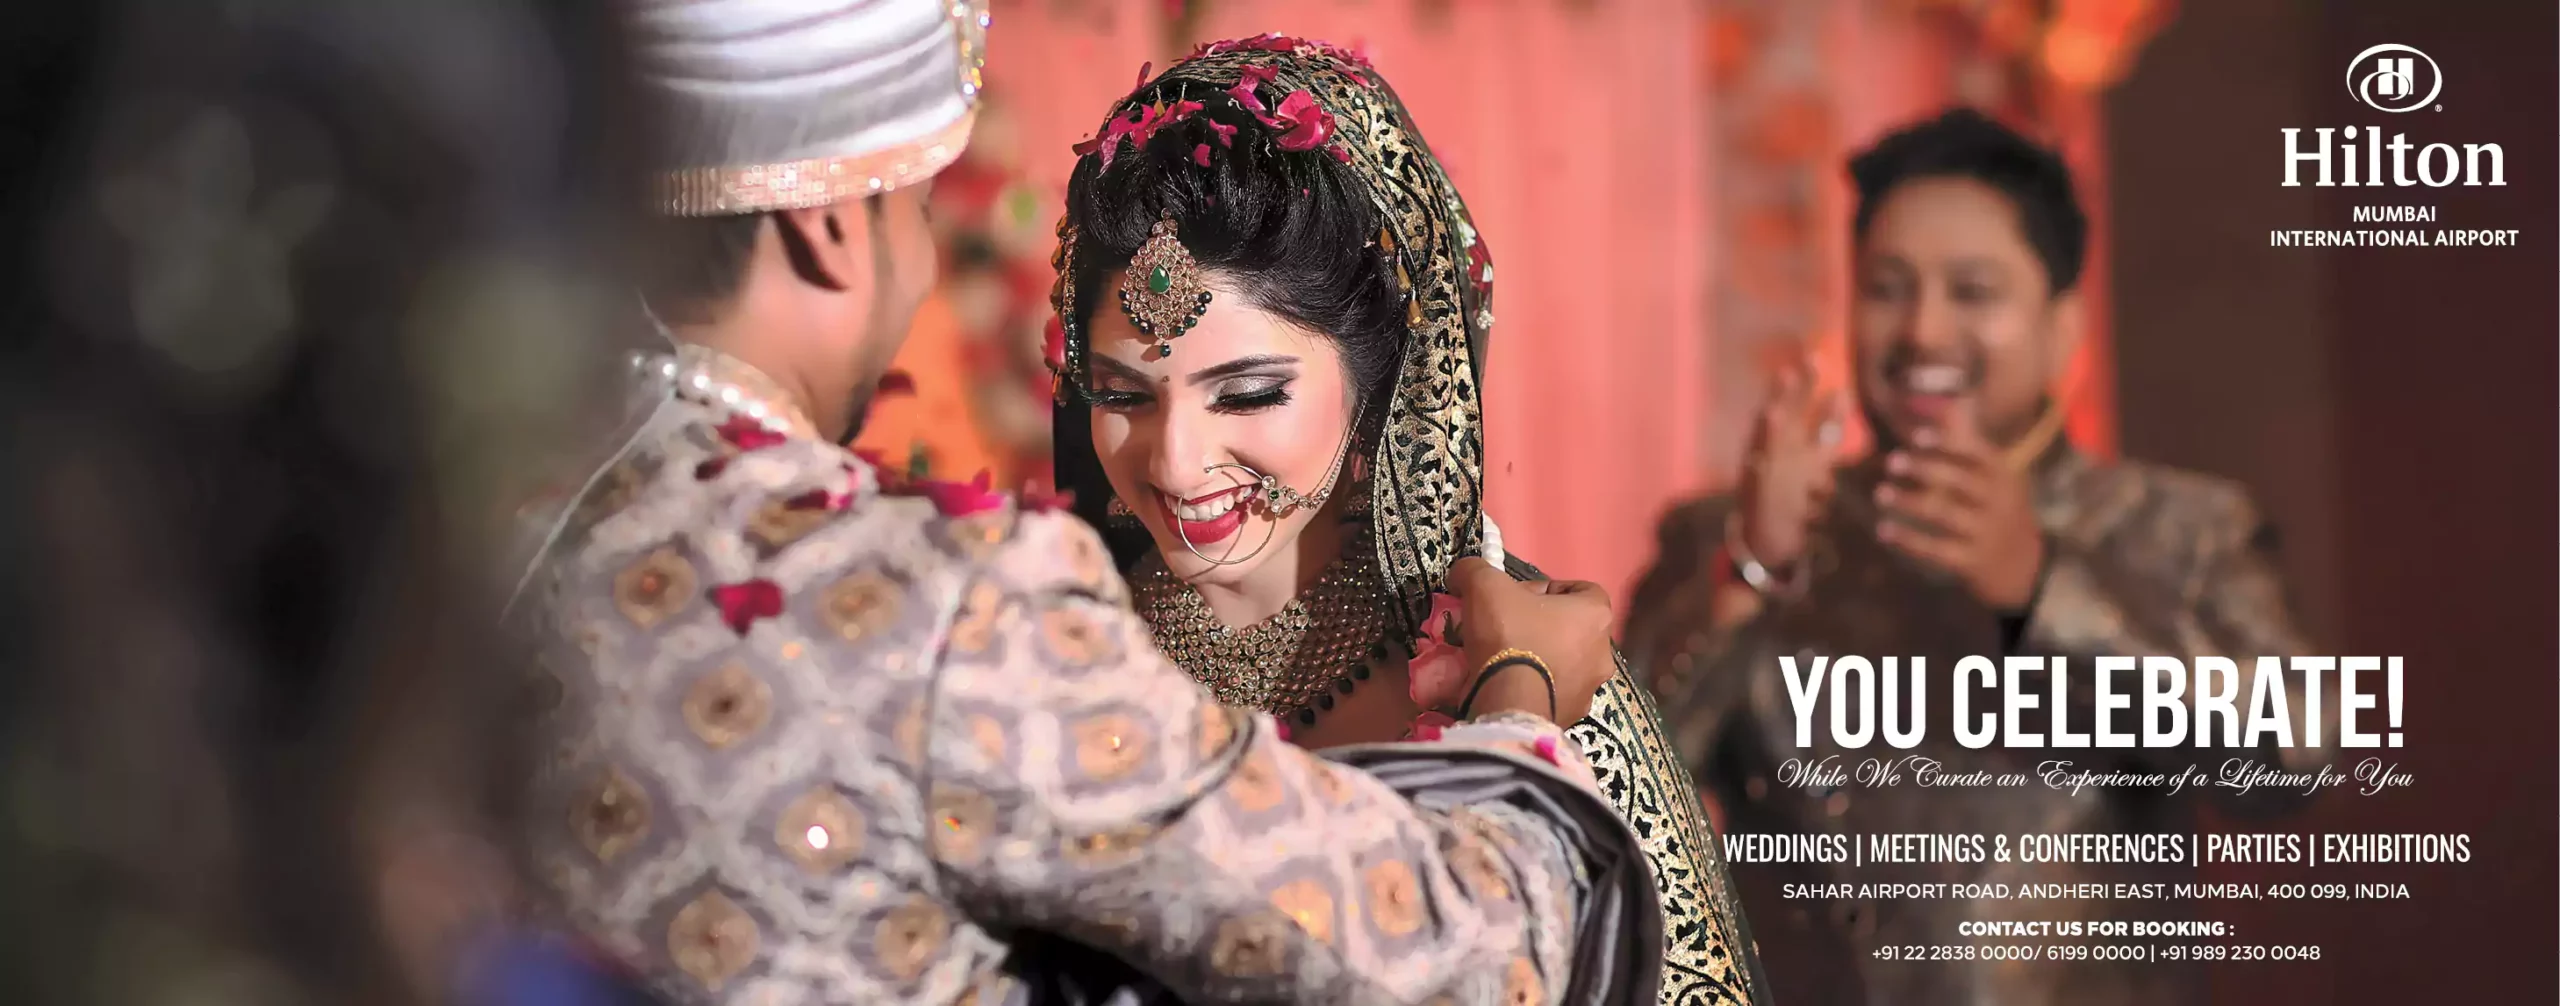 hilton-mumbai-wedding-affair